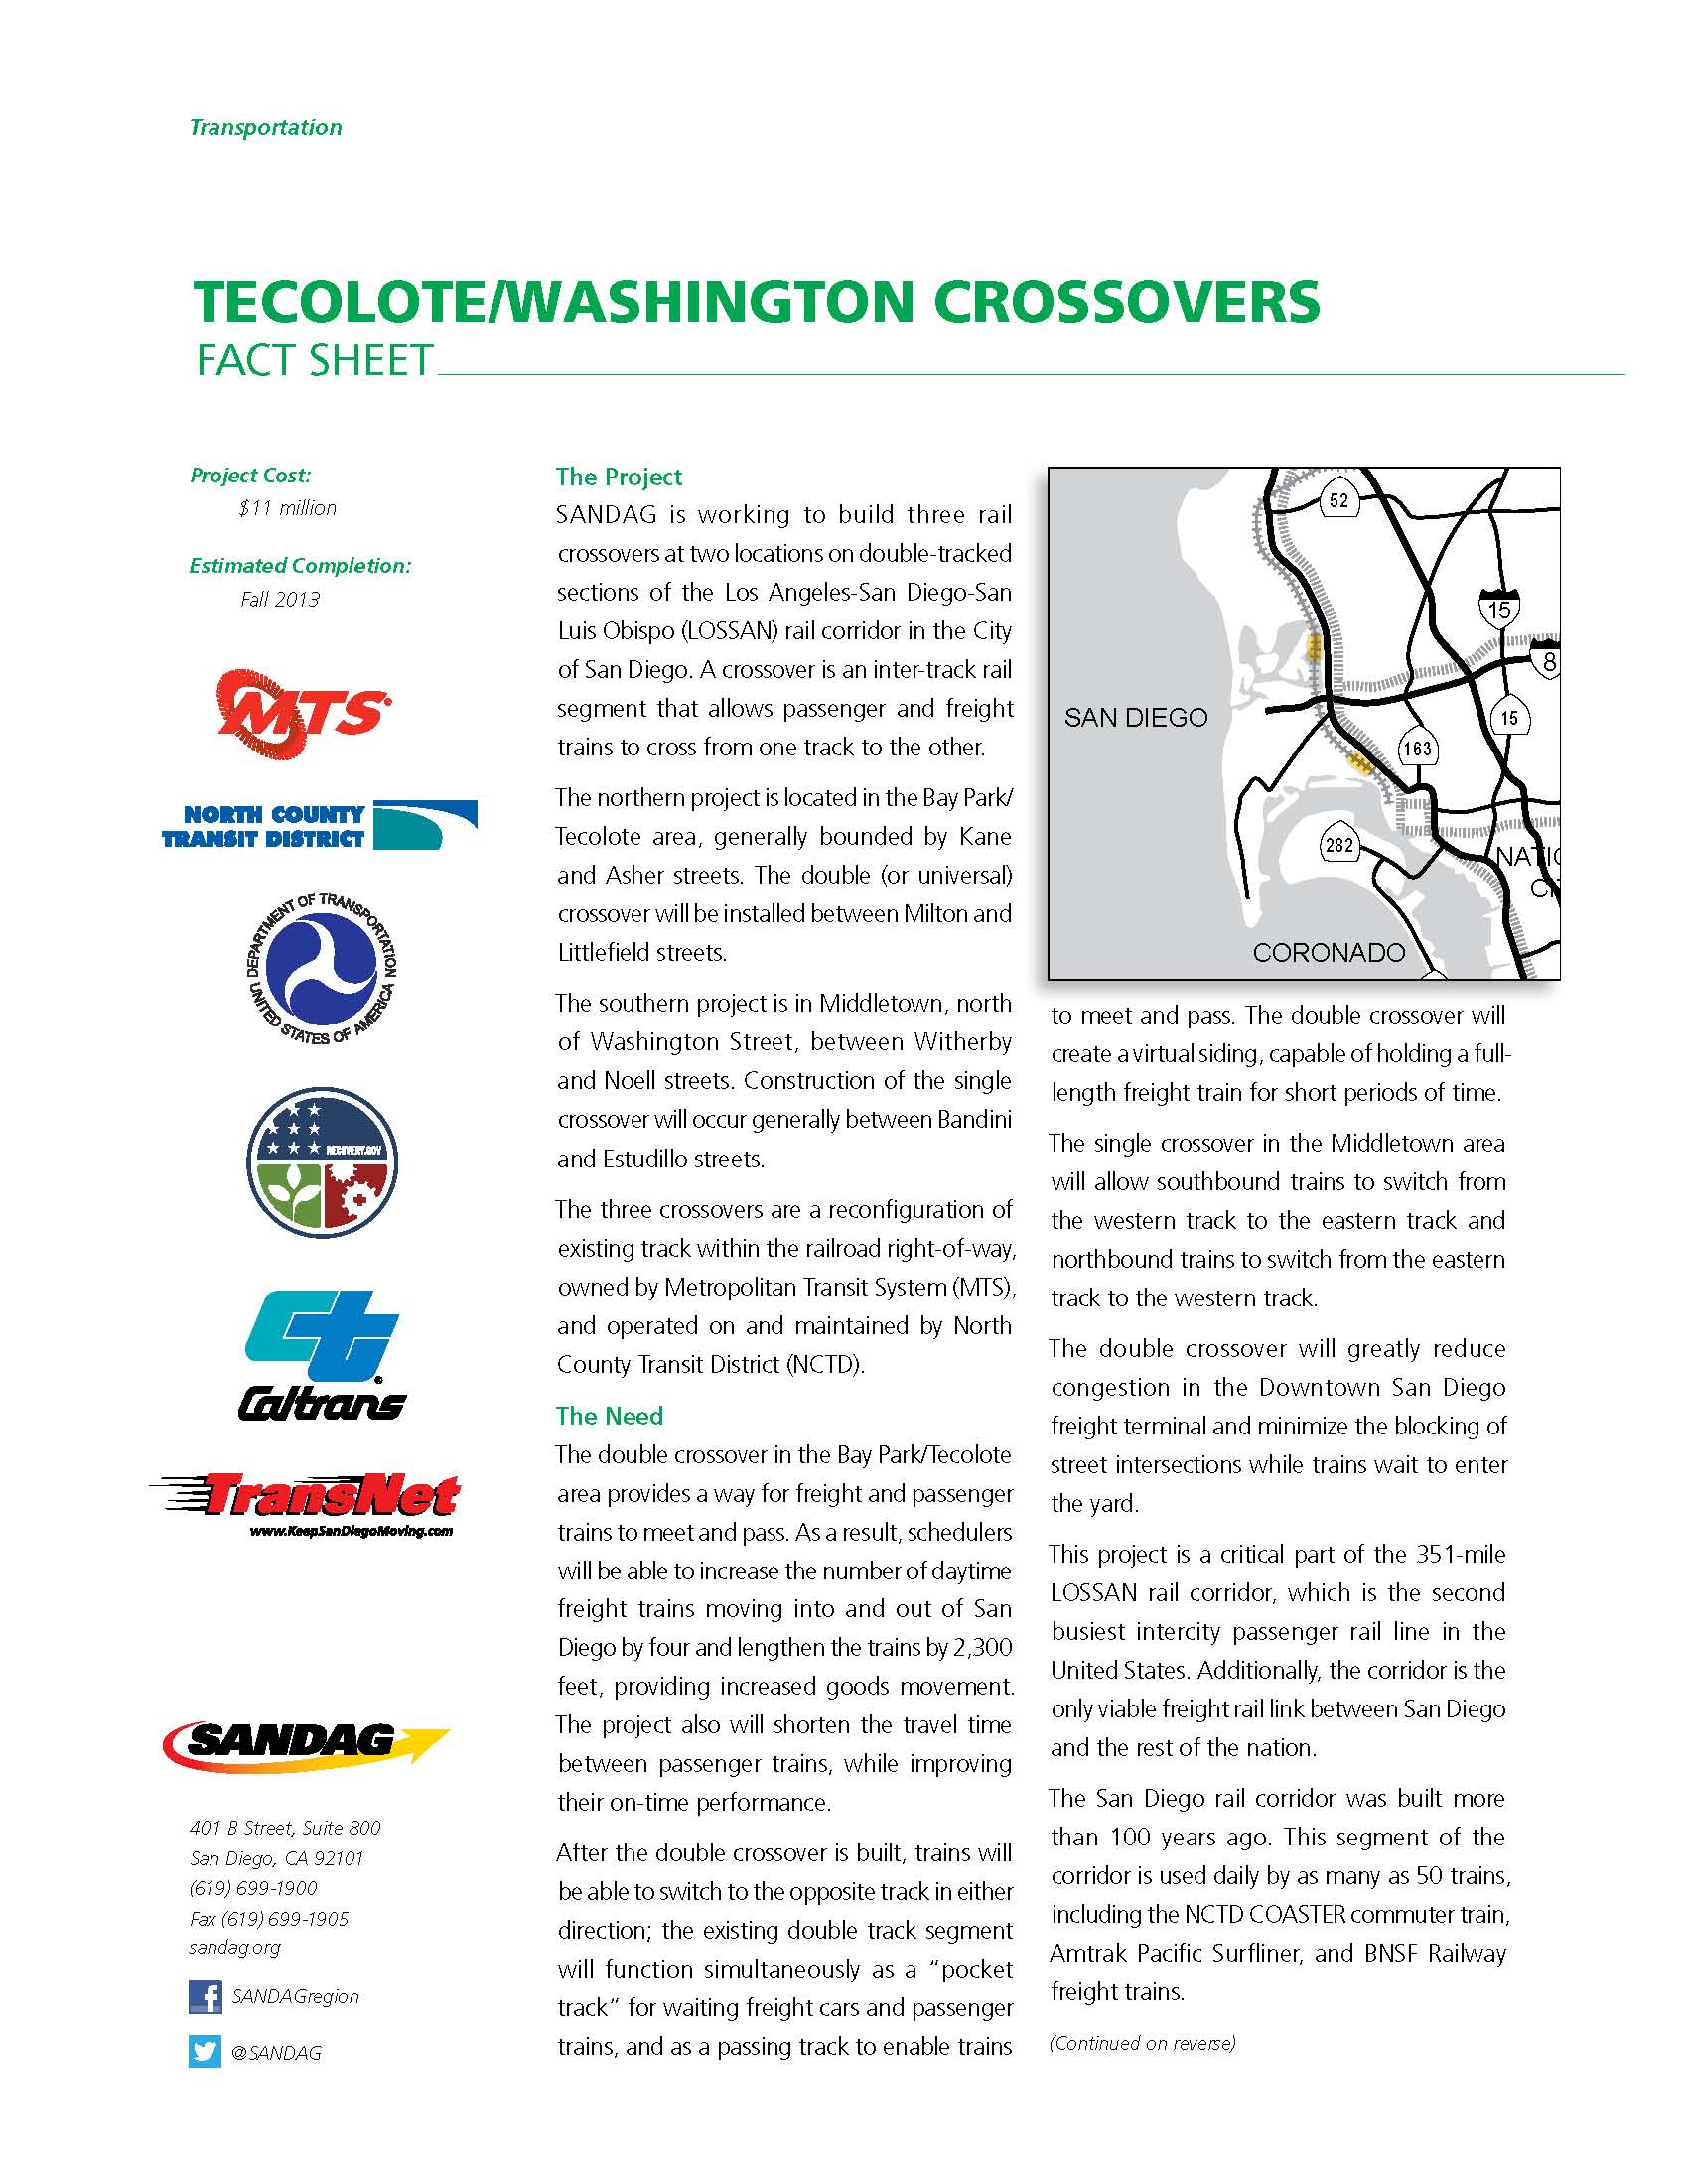 Fact Sheet - Tecolote Washington Crossovers